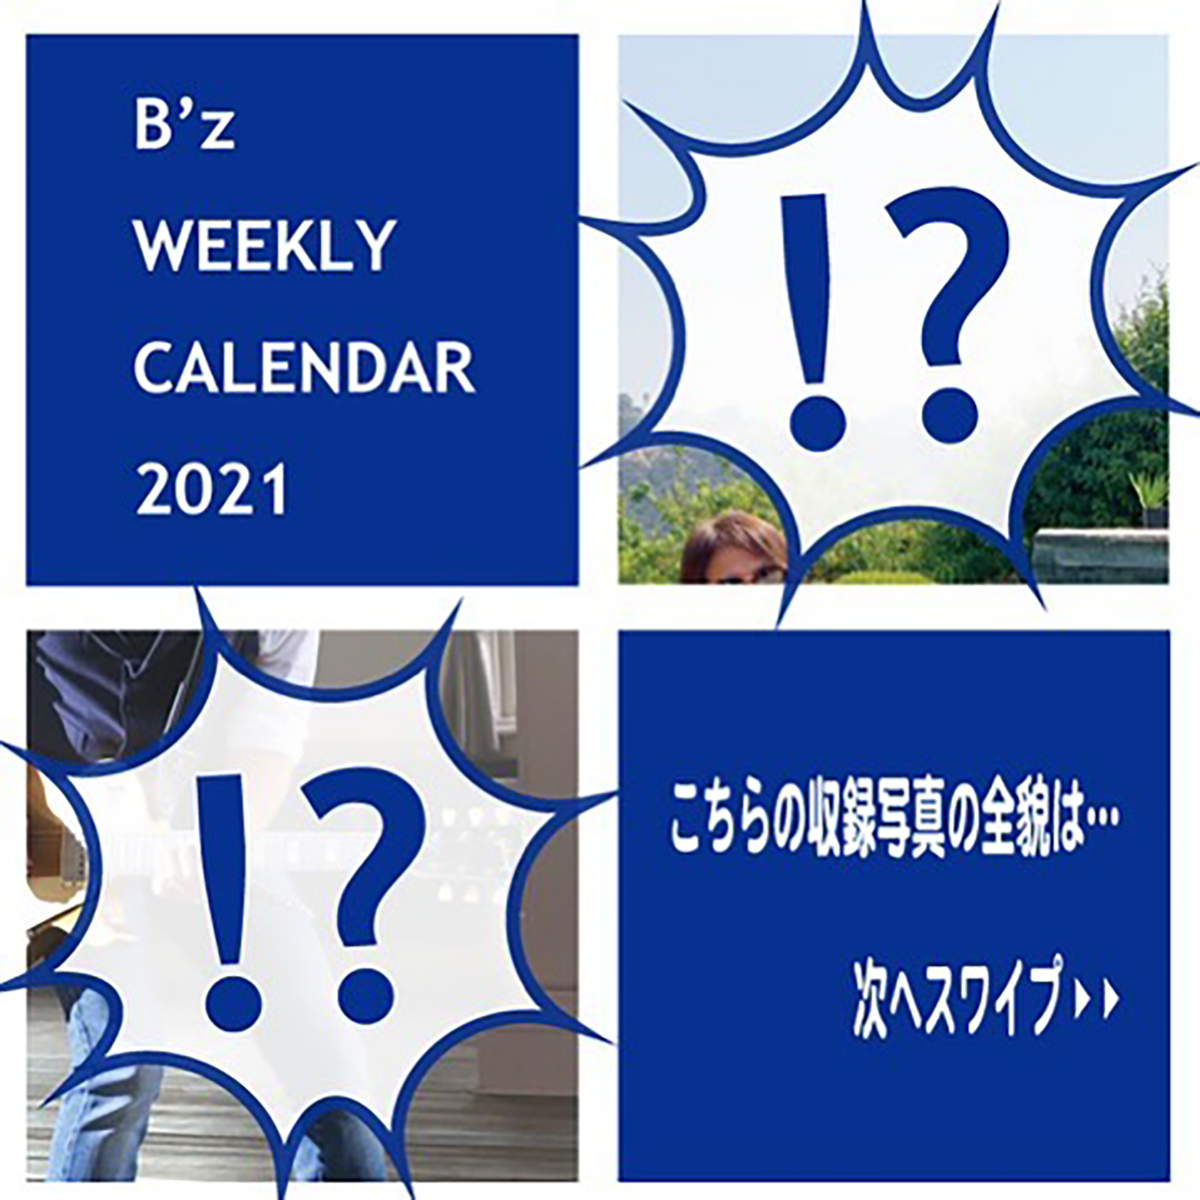 B'z公式Instagramで公開された「B’zカレンダー2021」の松本孝弘の写真